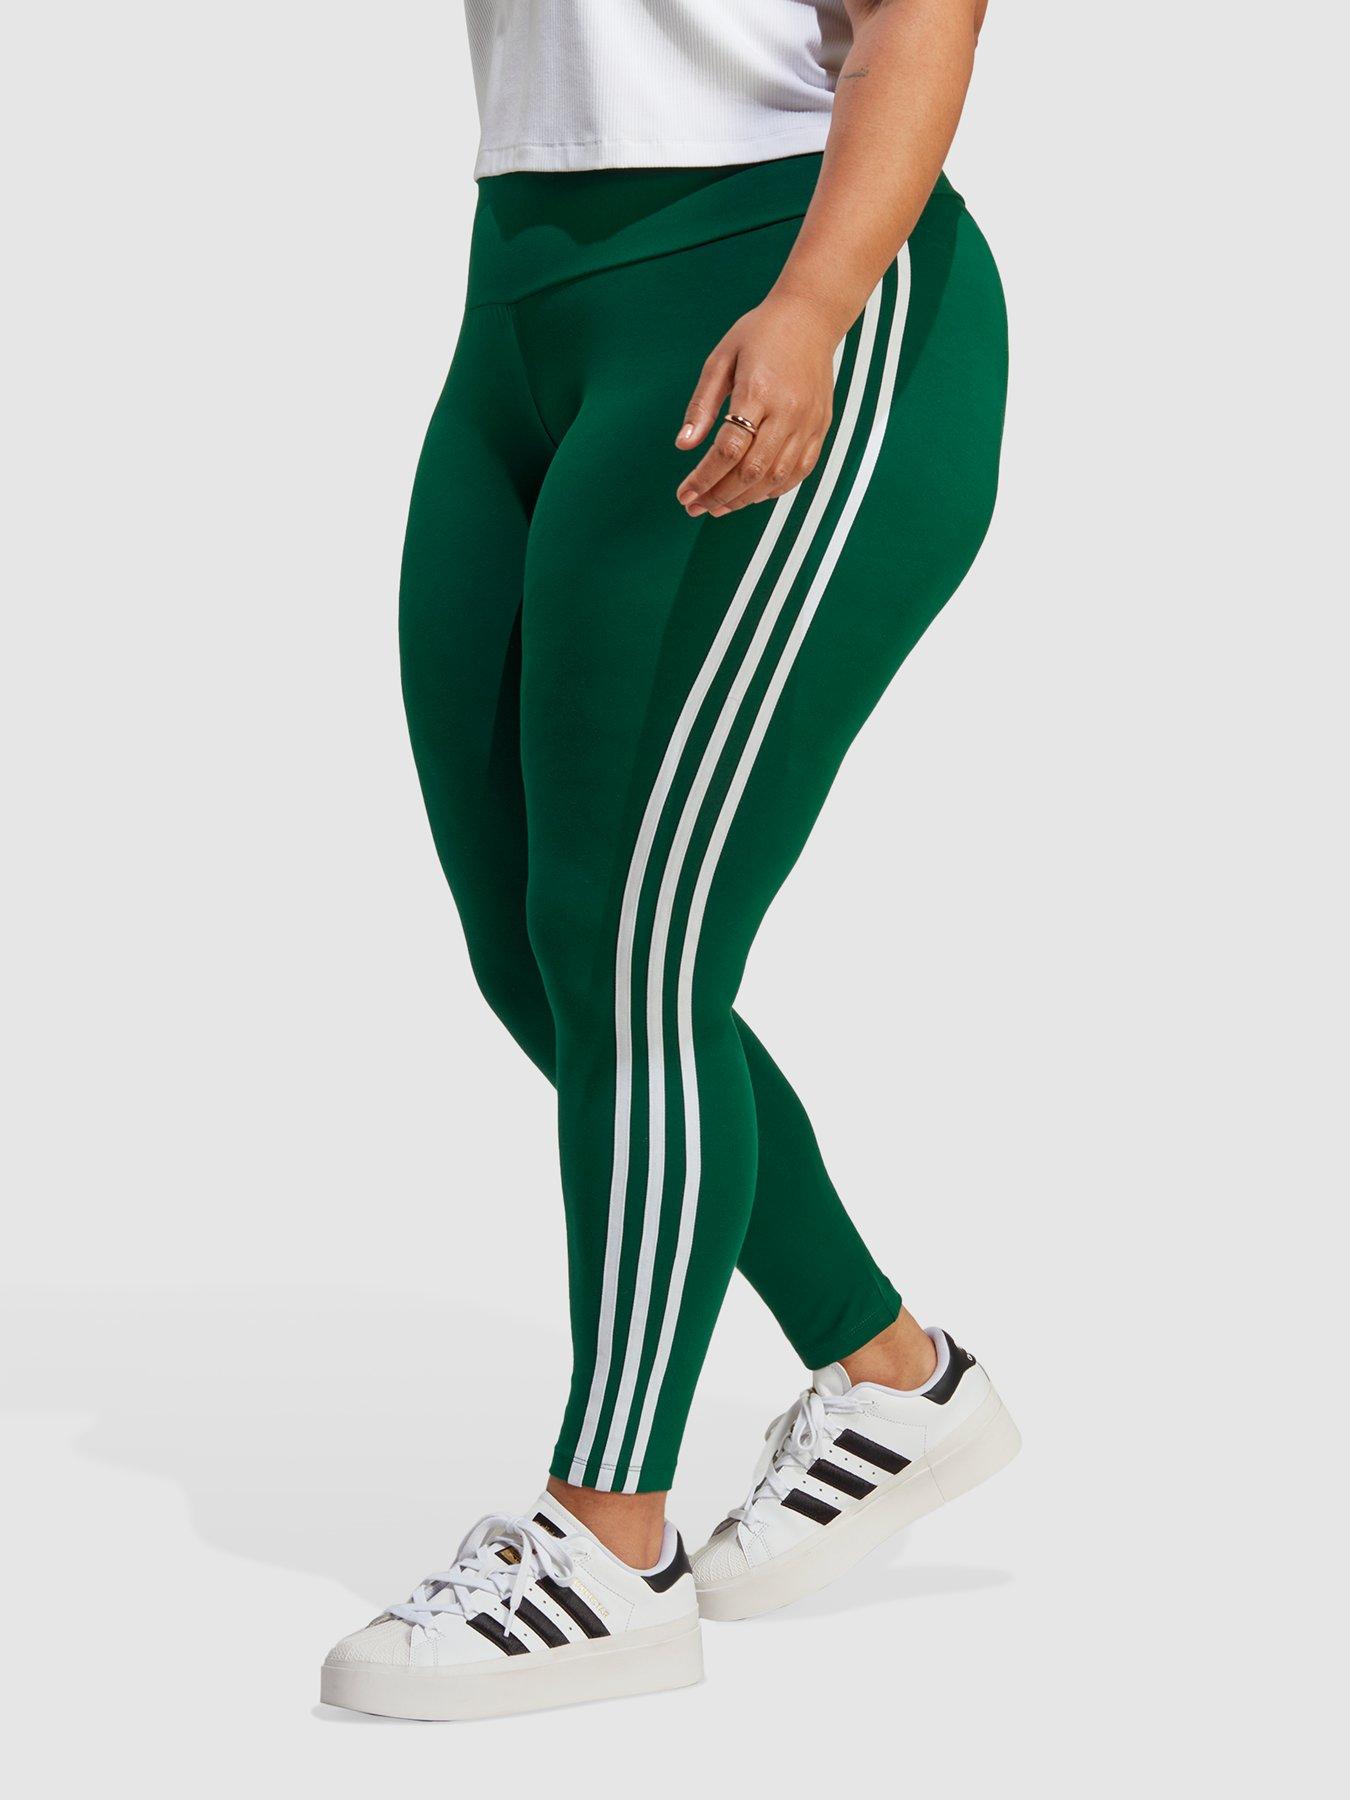 Adidas originals | Tights & leggings | | Women | www.littlewoods.com